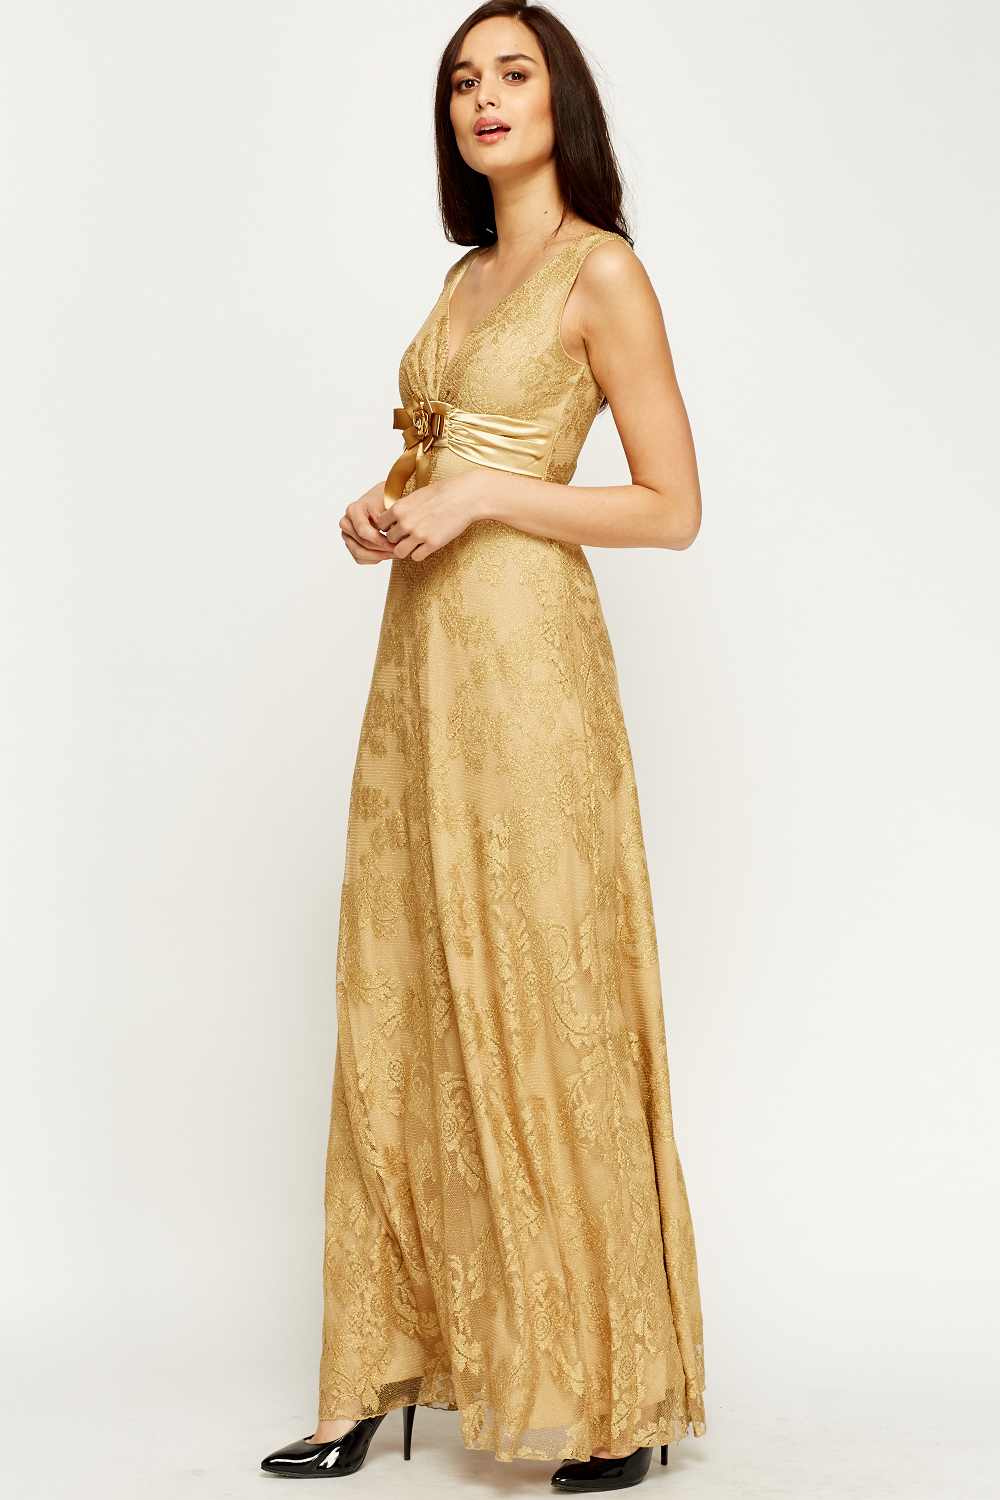 Metallic Gold Maxi Dress - Just $7